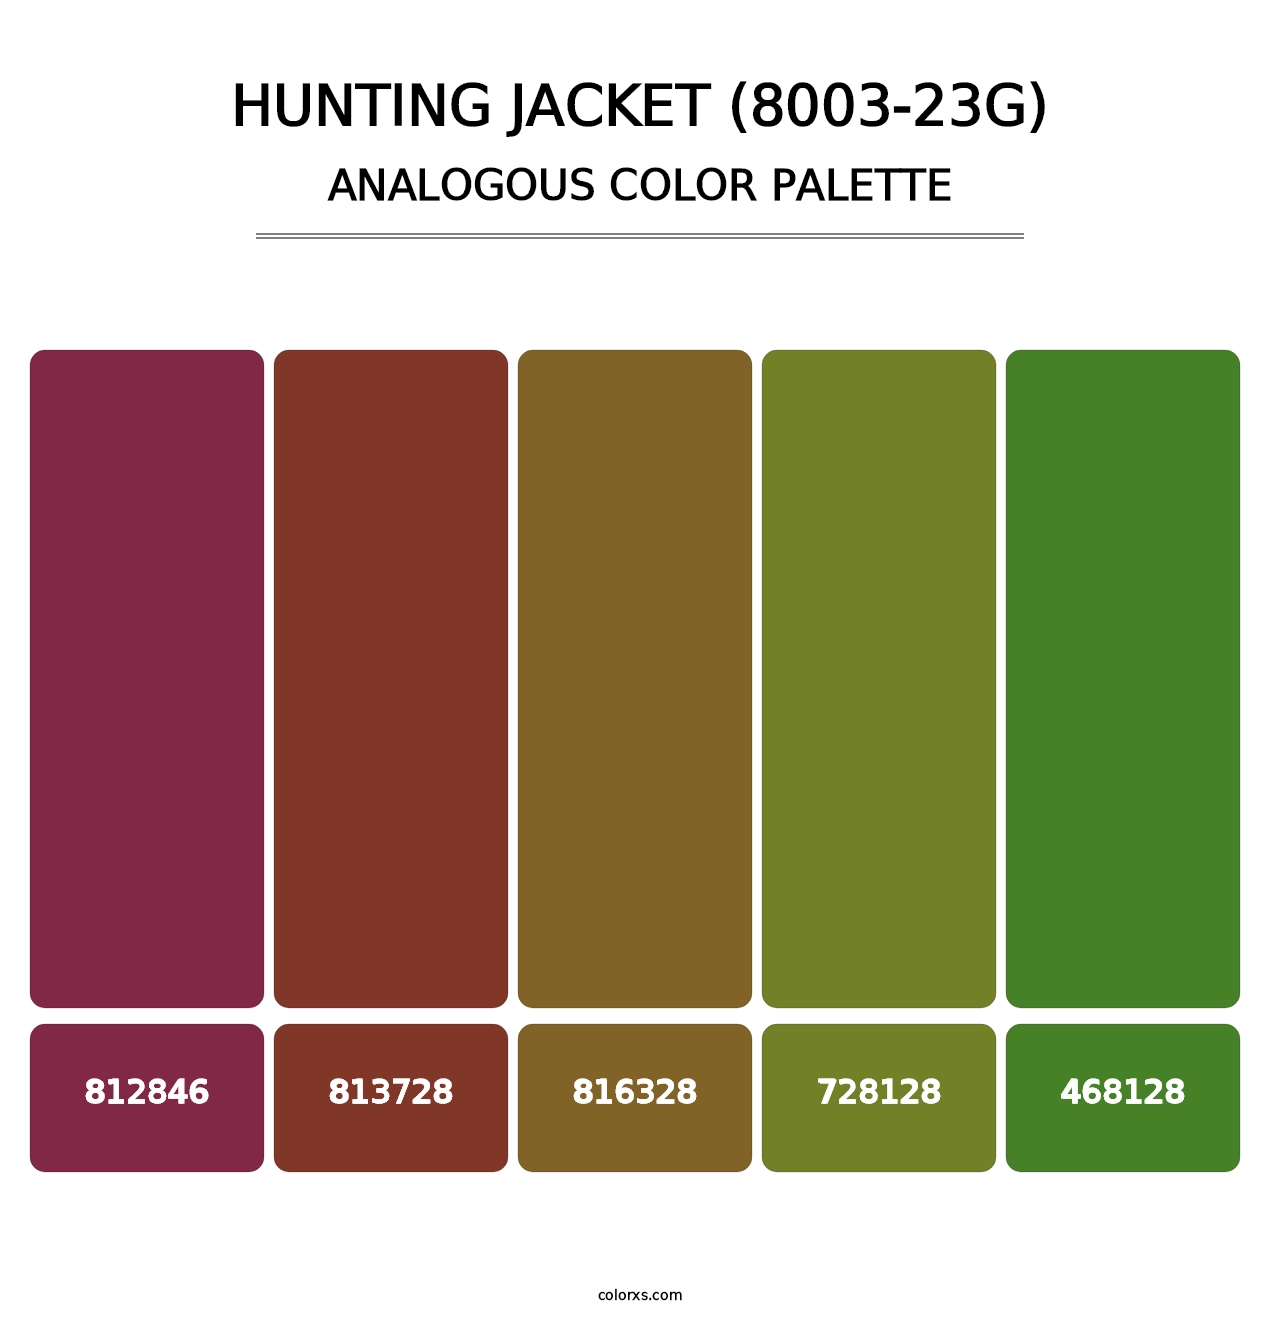 Hunting Jacket (8003-23G) - Analogous Color Palette